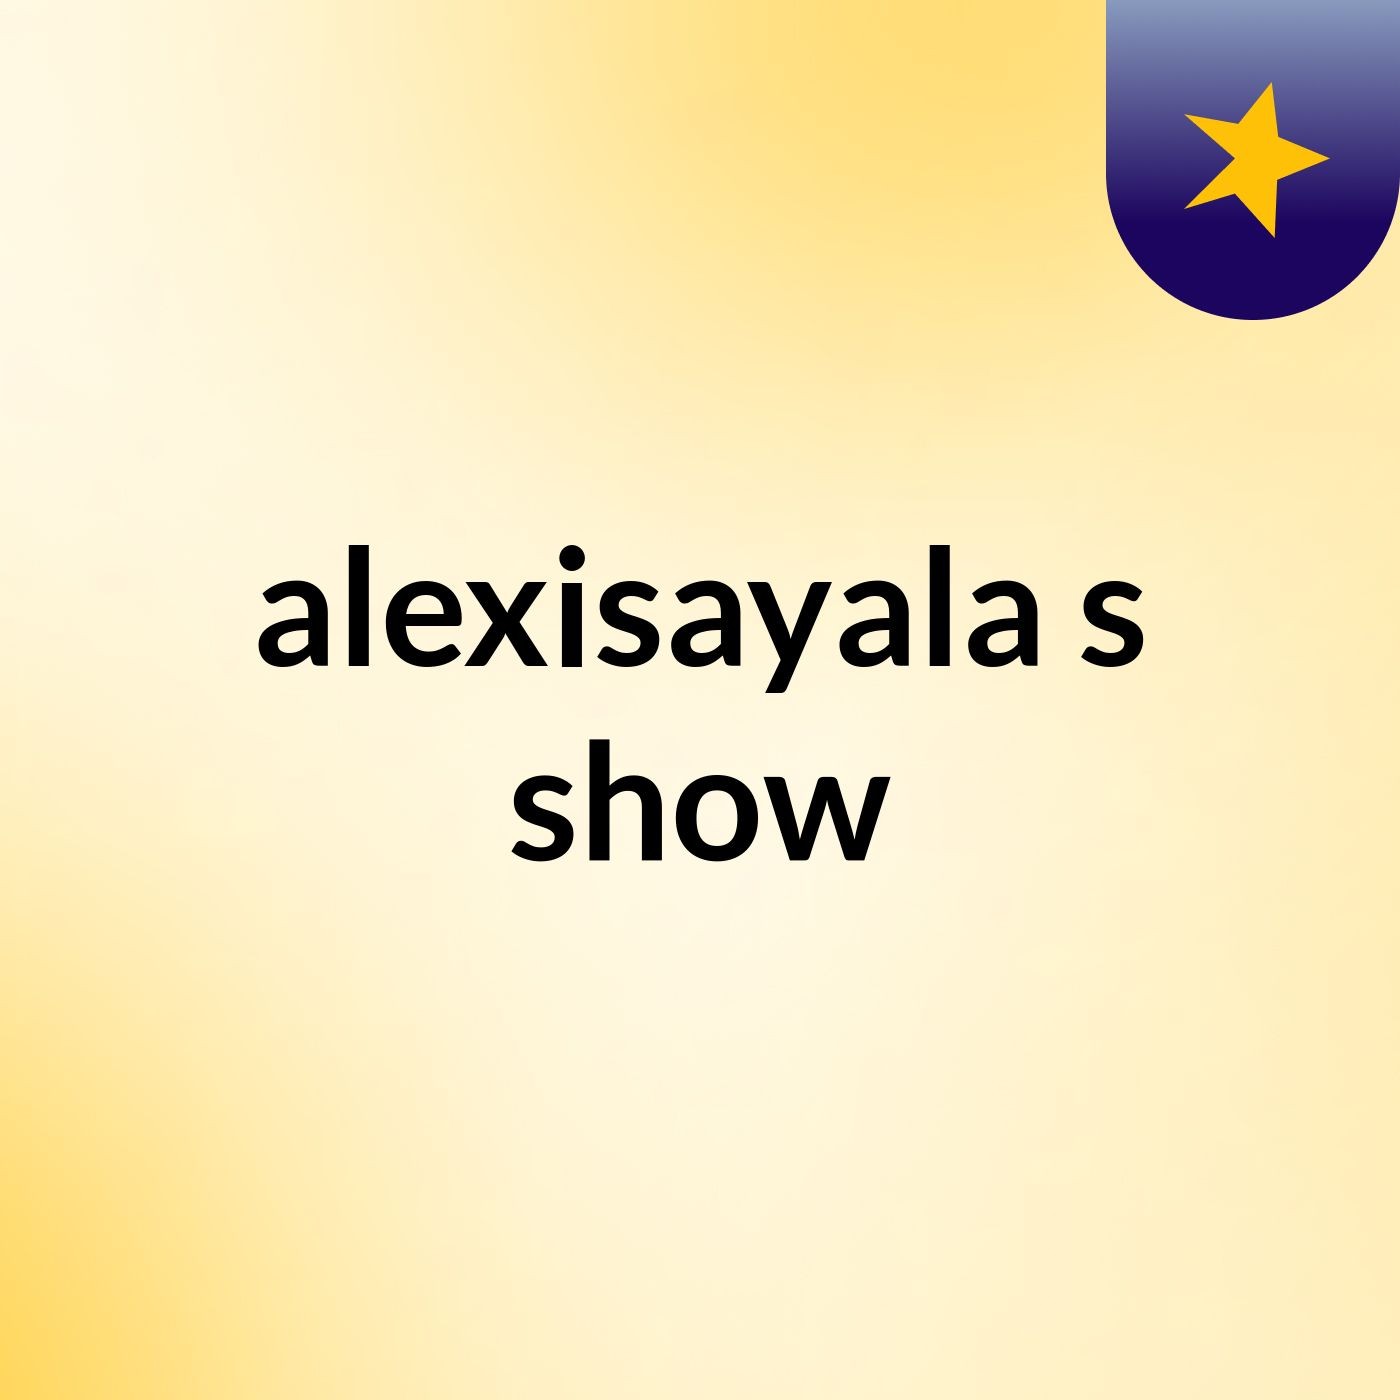 alexisayala's show